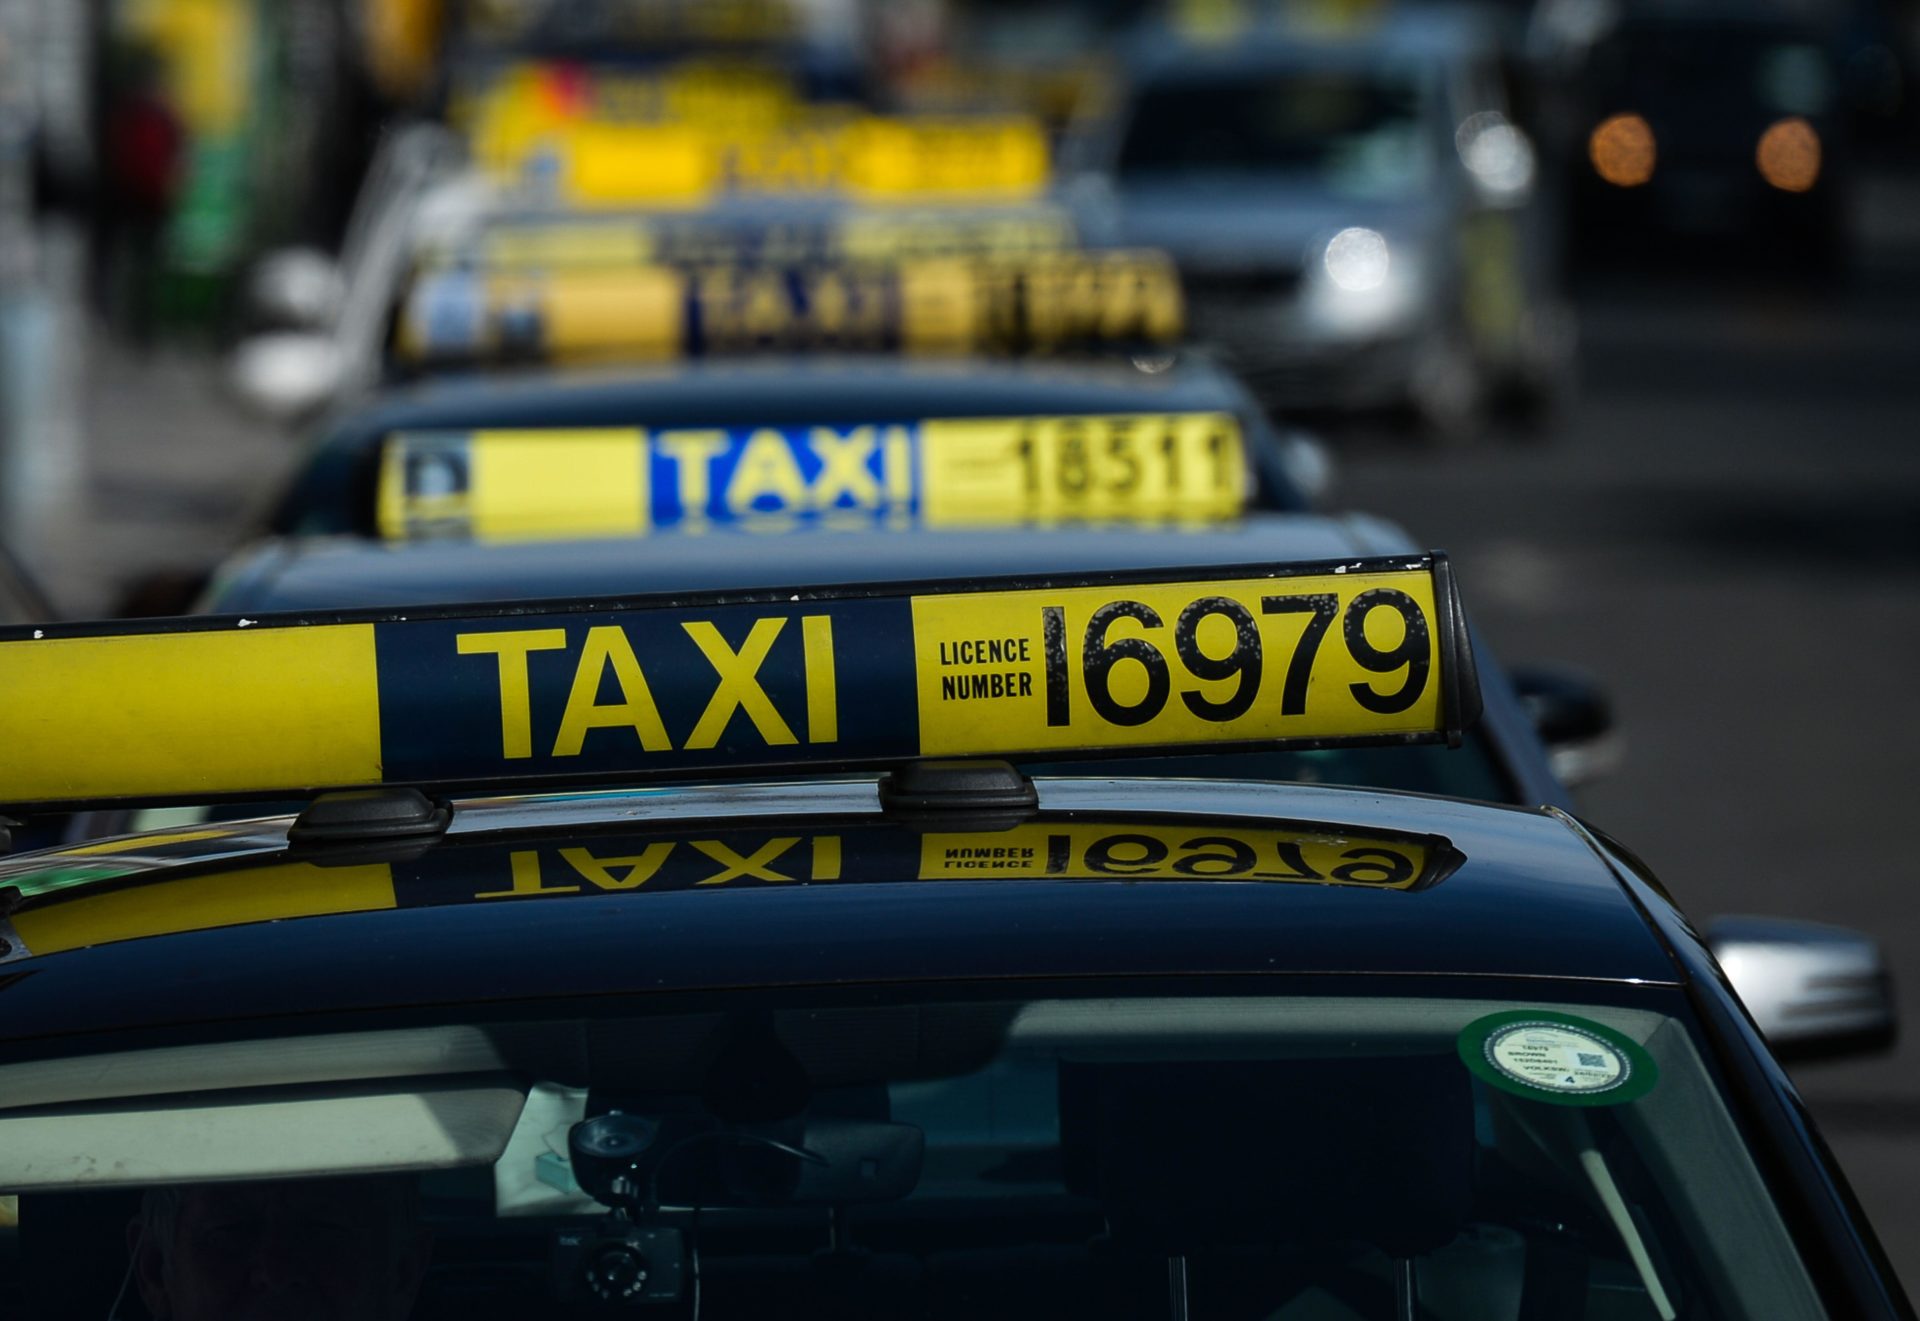 A line of taxis in Dublin city centre, 13-05-2021. Image: Artur Widak/NurPhoto